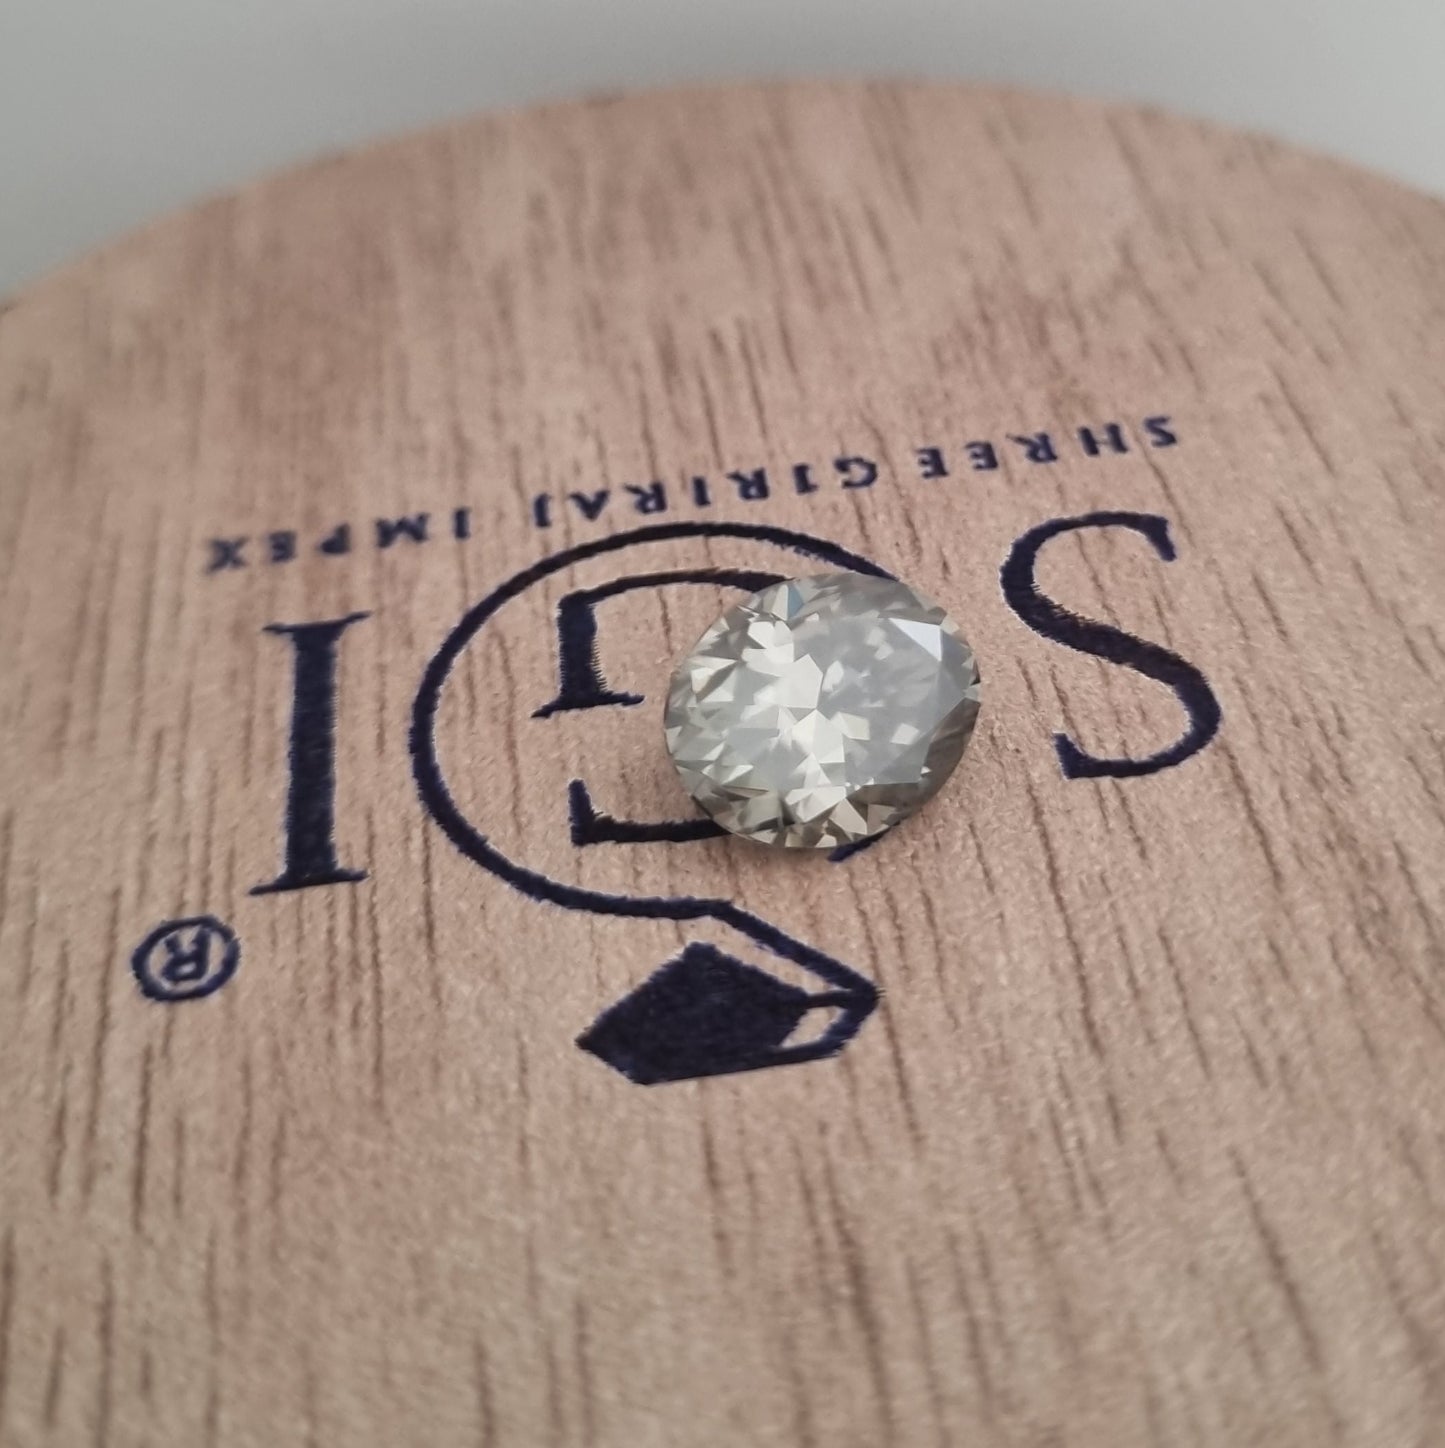 3.88ct 9×11 Oval Shape Natural Gray Moissanite Diamond For Jewellery Settings